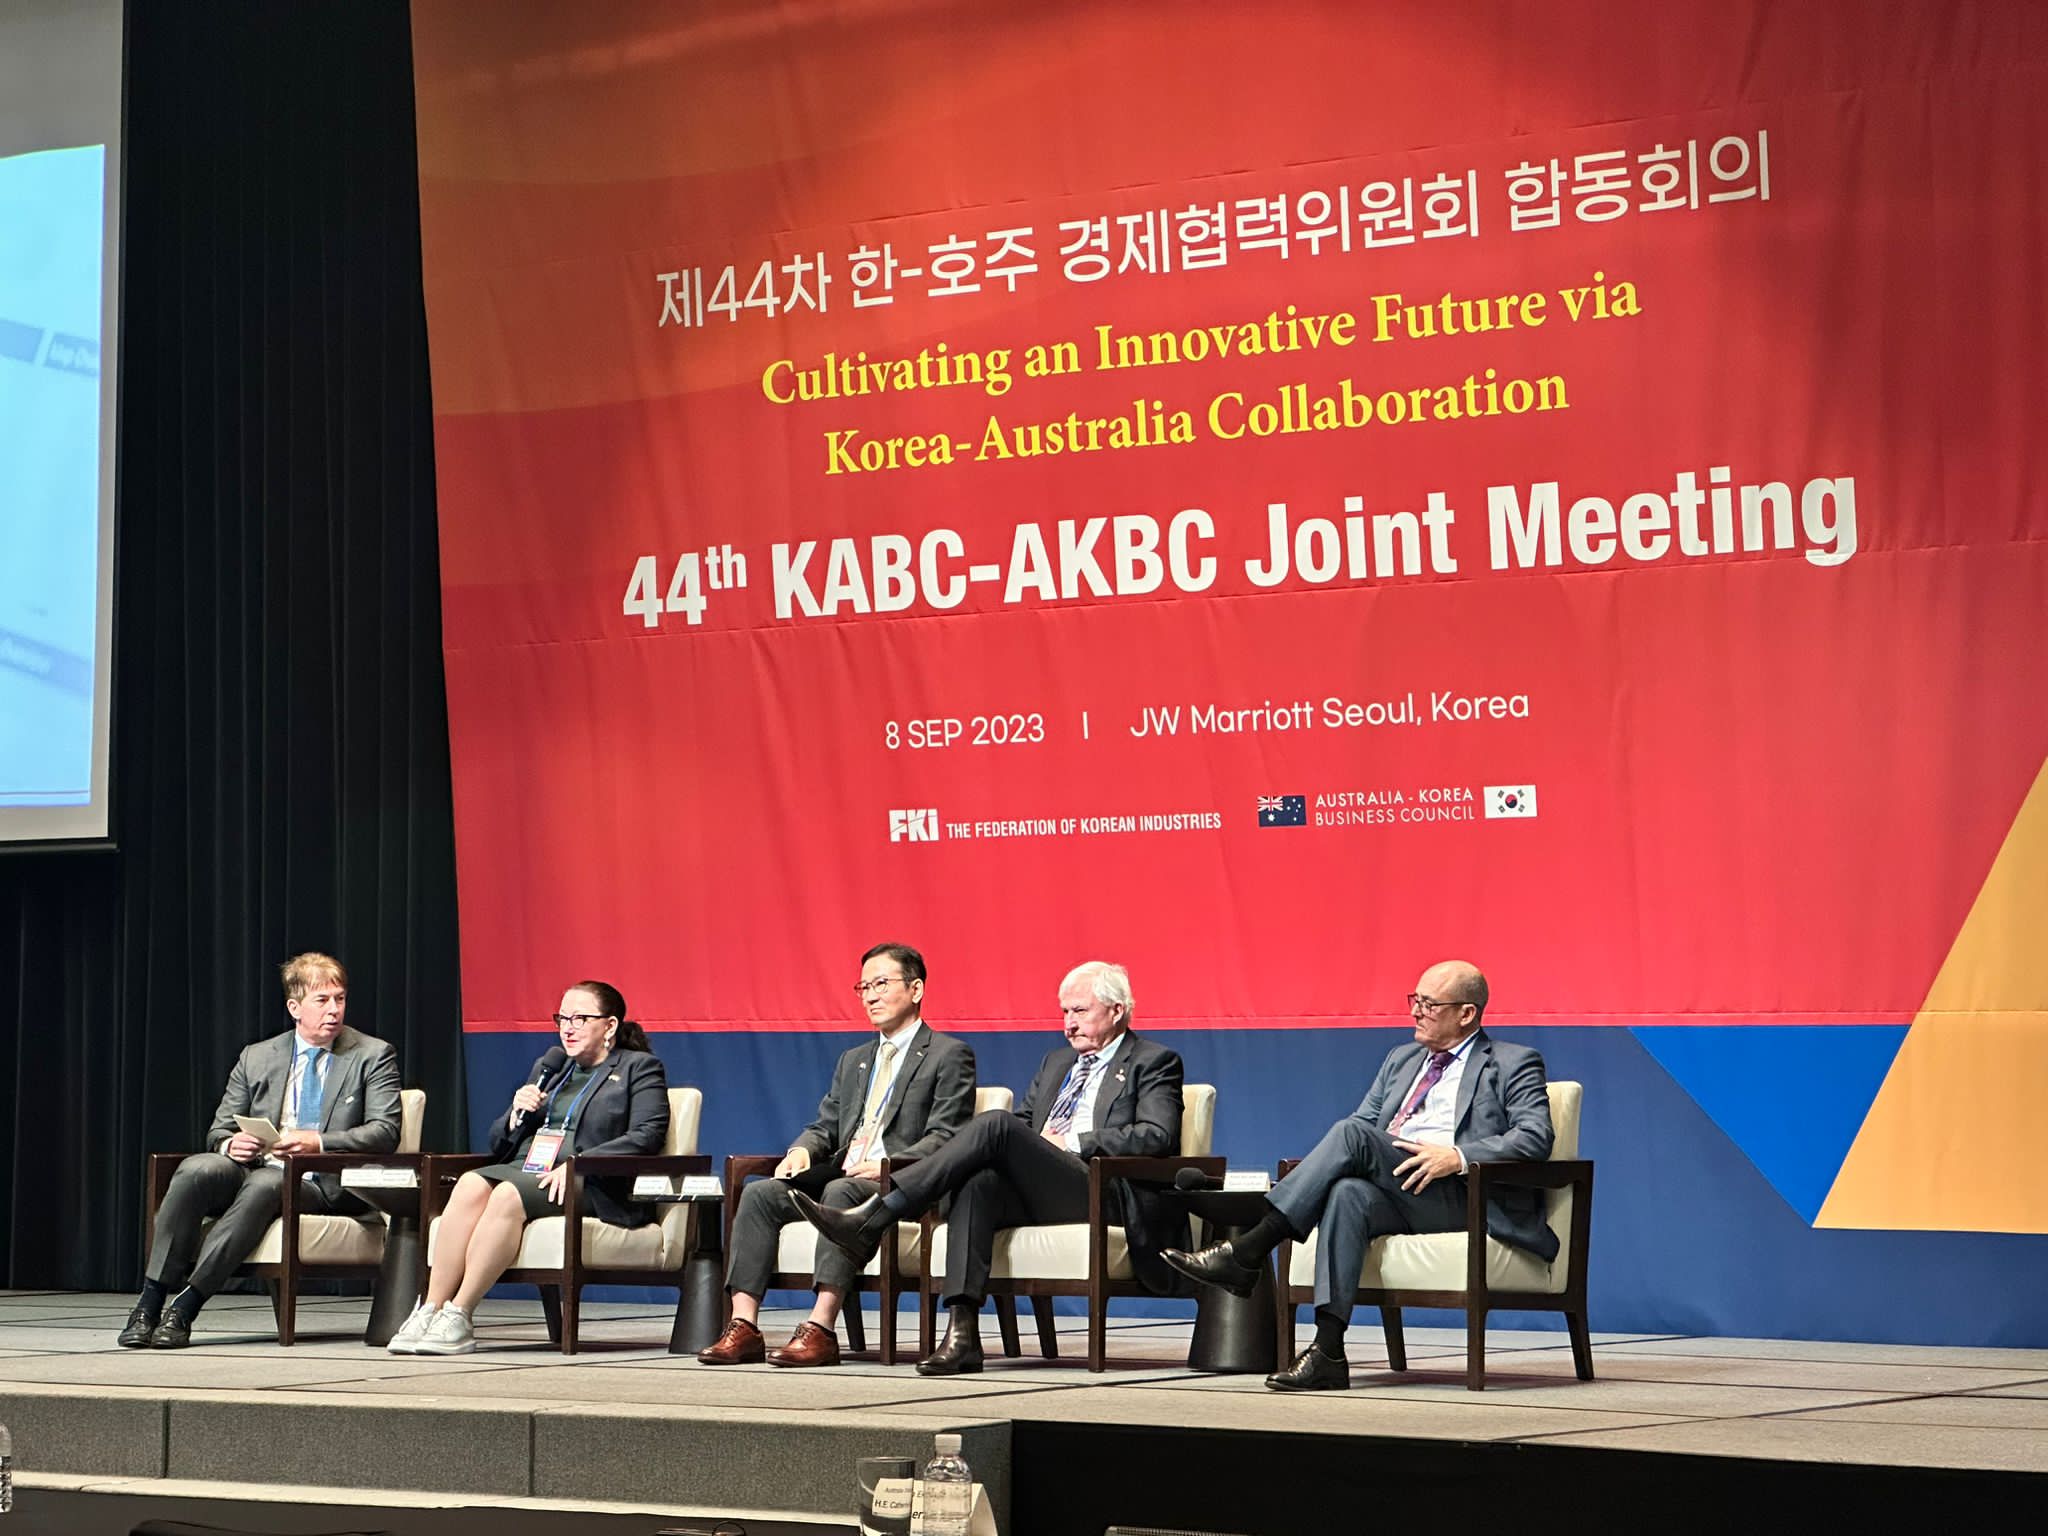 ASM presents at KABC-AKBC Joint Meeting in Seoul